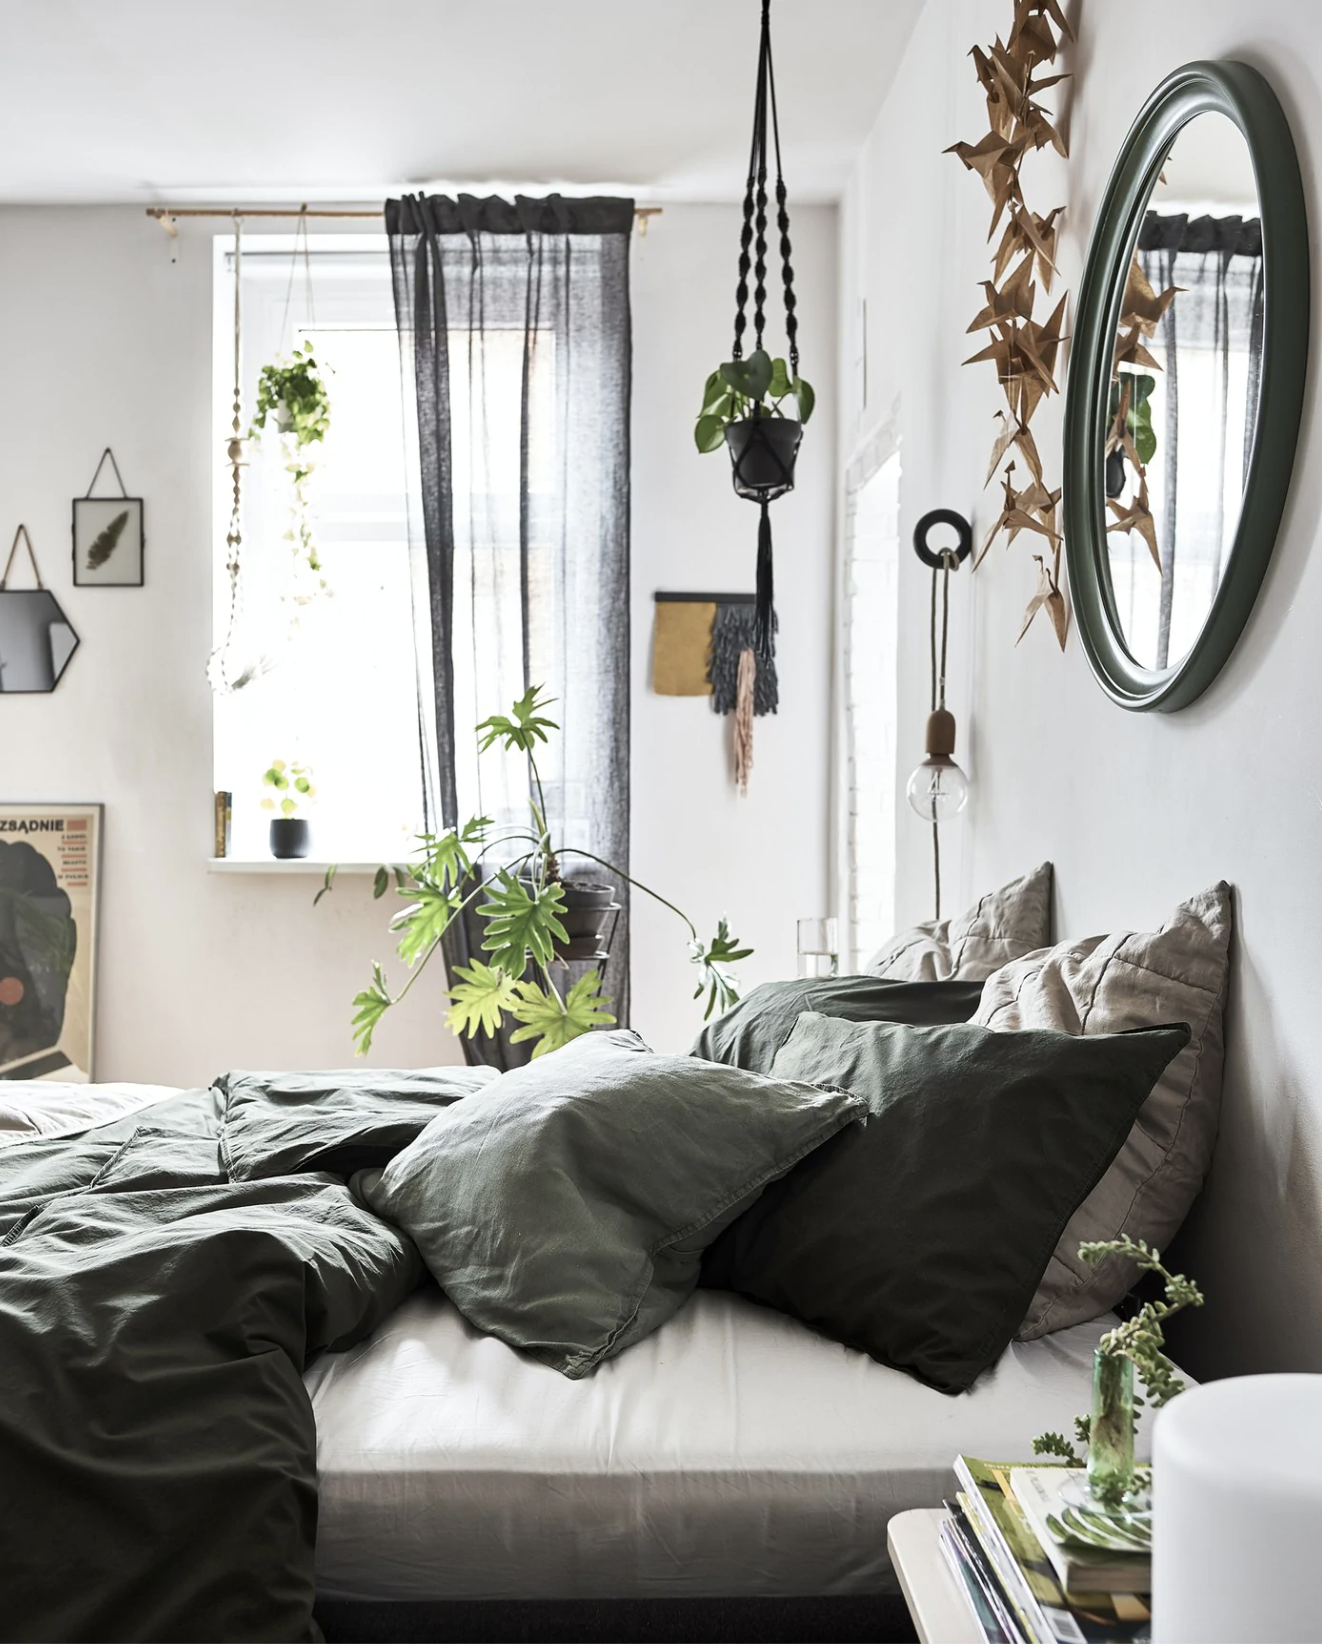 Bedroom idea using houseplants